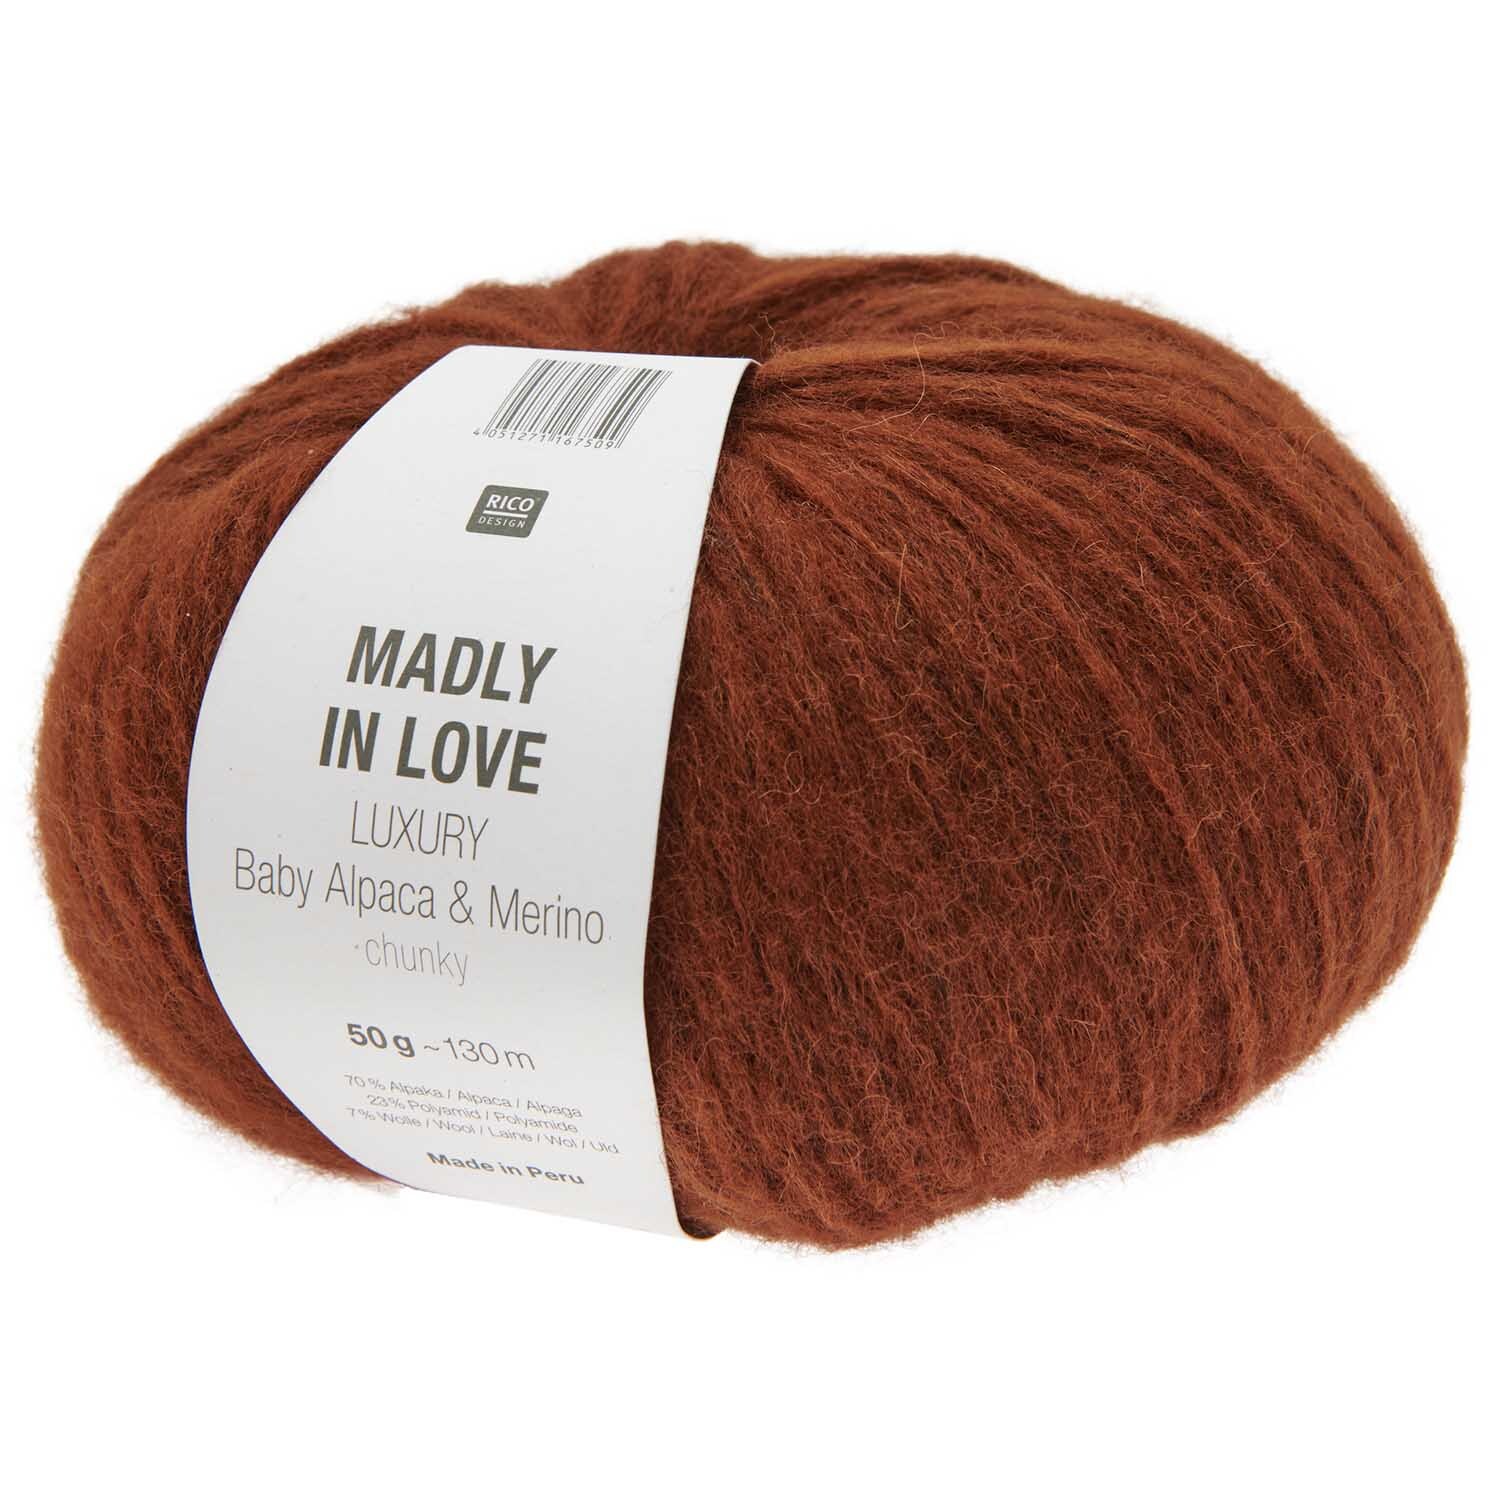 Luxury Baby Alpaca & Merino chunky - Madly in Love